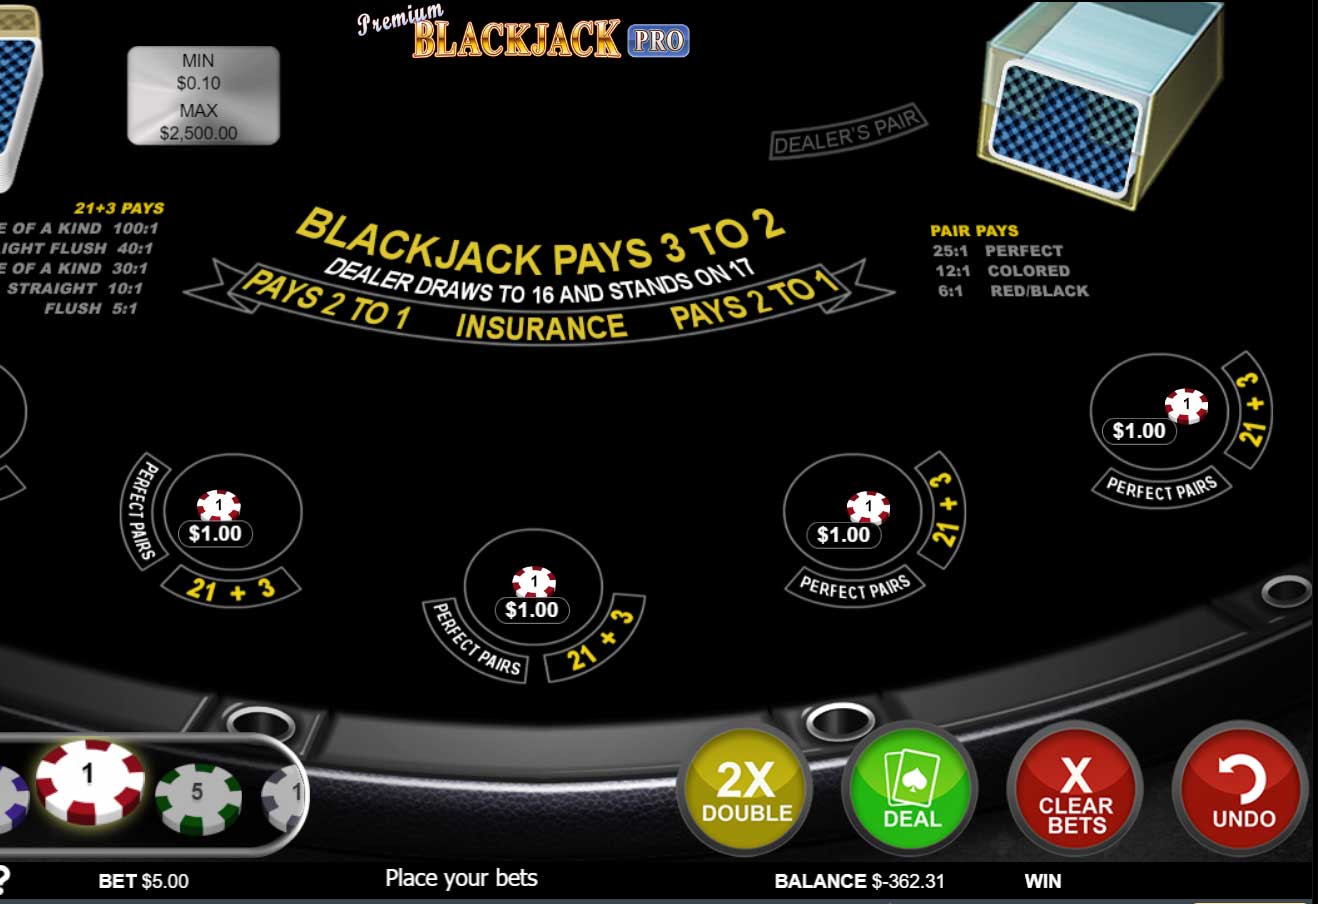 Kinh nghiem choi Blackjack can thiet voi nguoi choi de thang lon